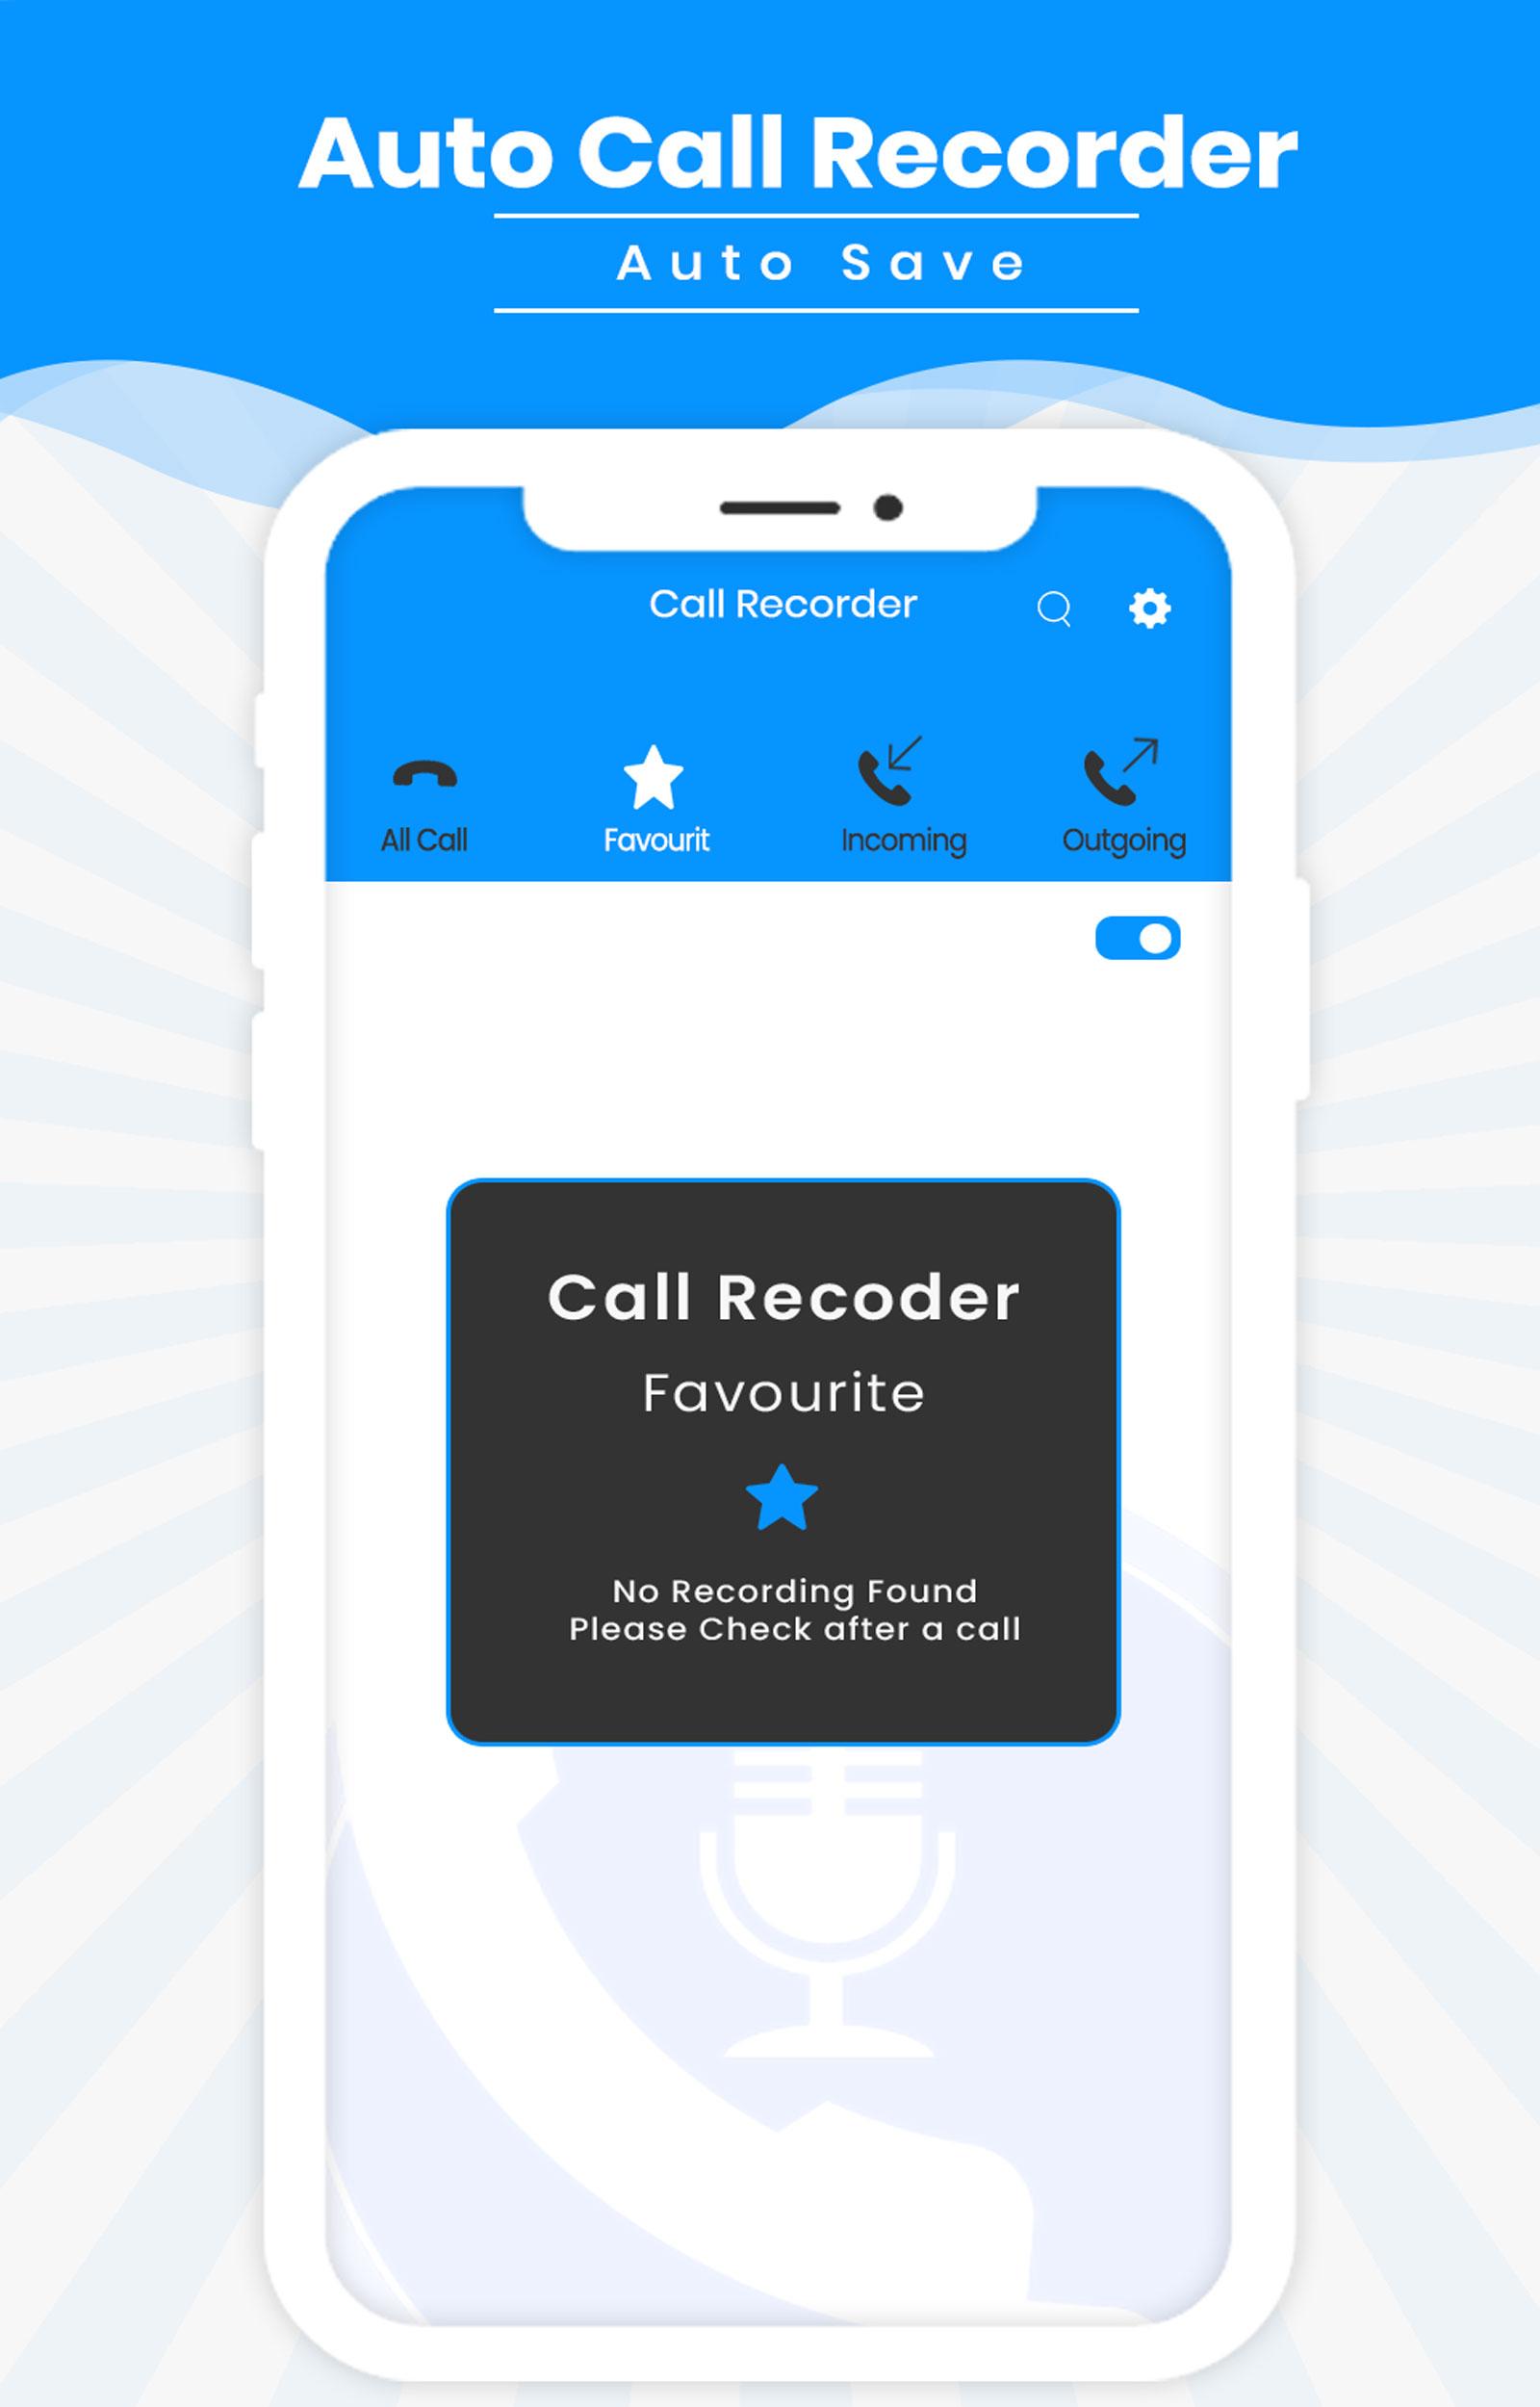 Auto Call Recorder - Auto Save 1.0.4 Screenshot 17